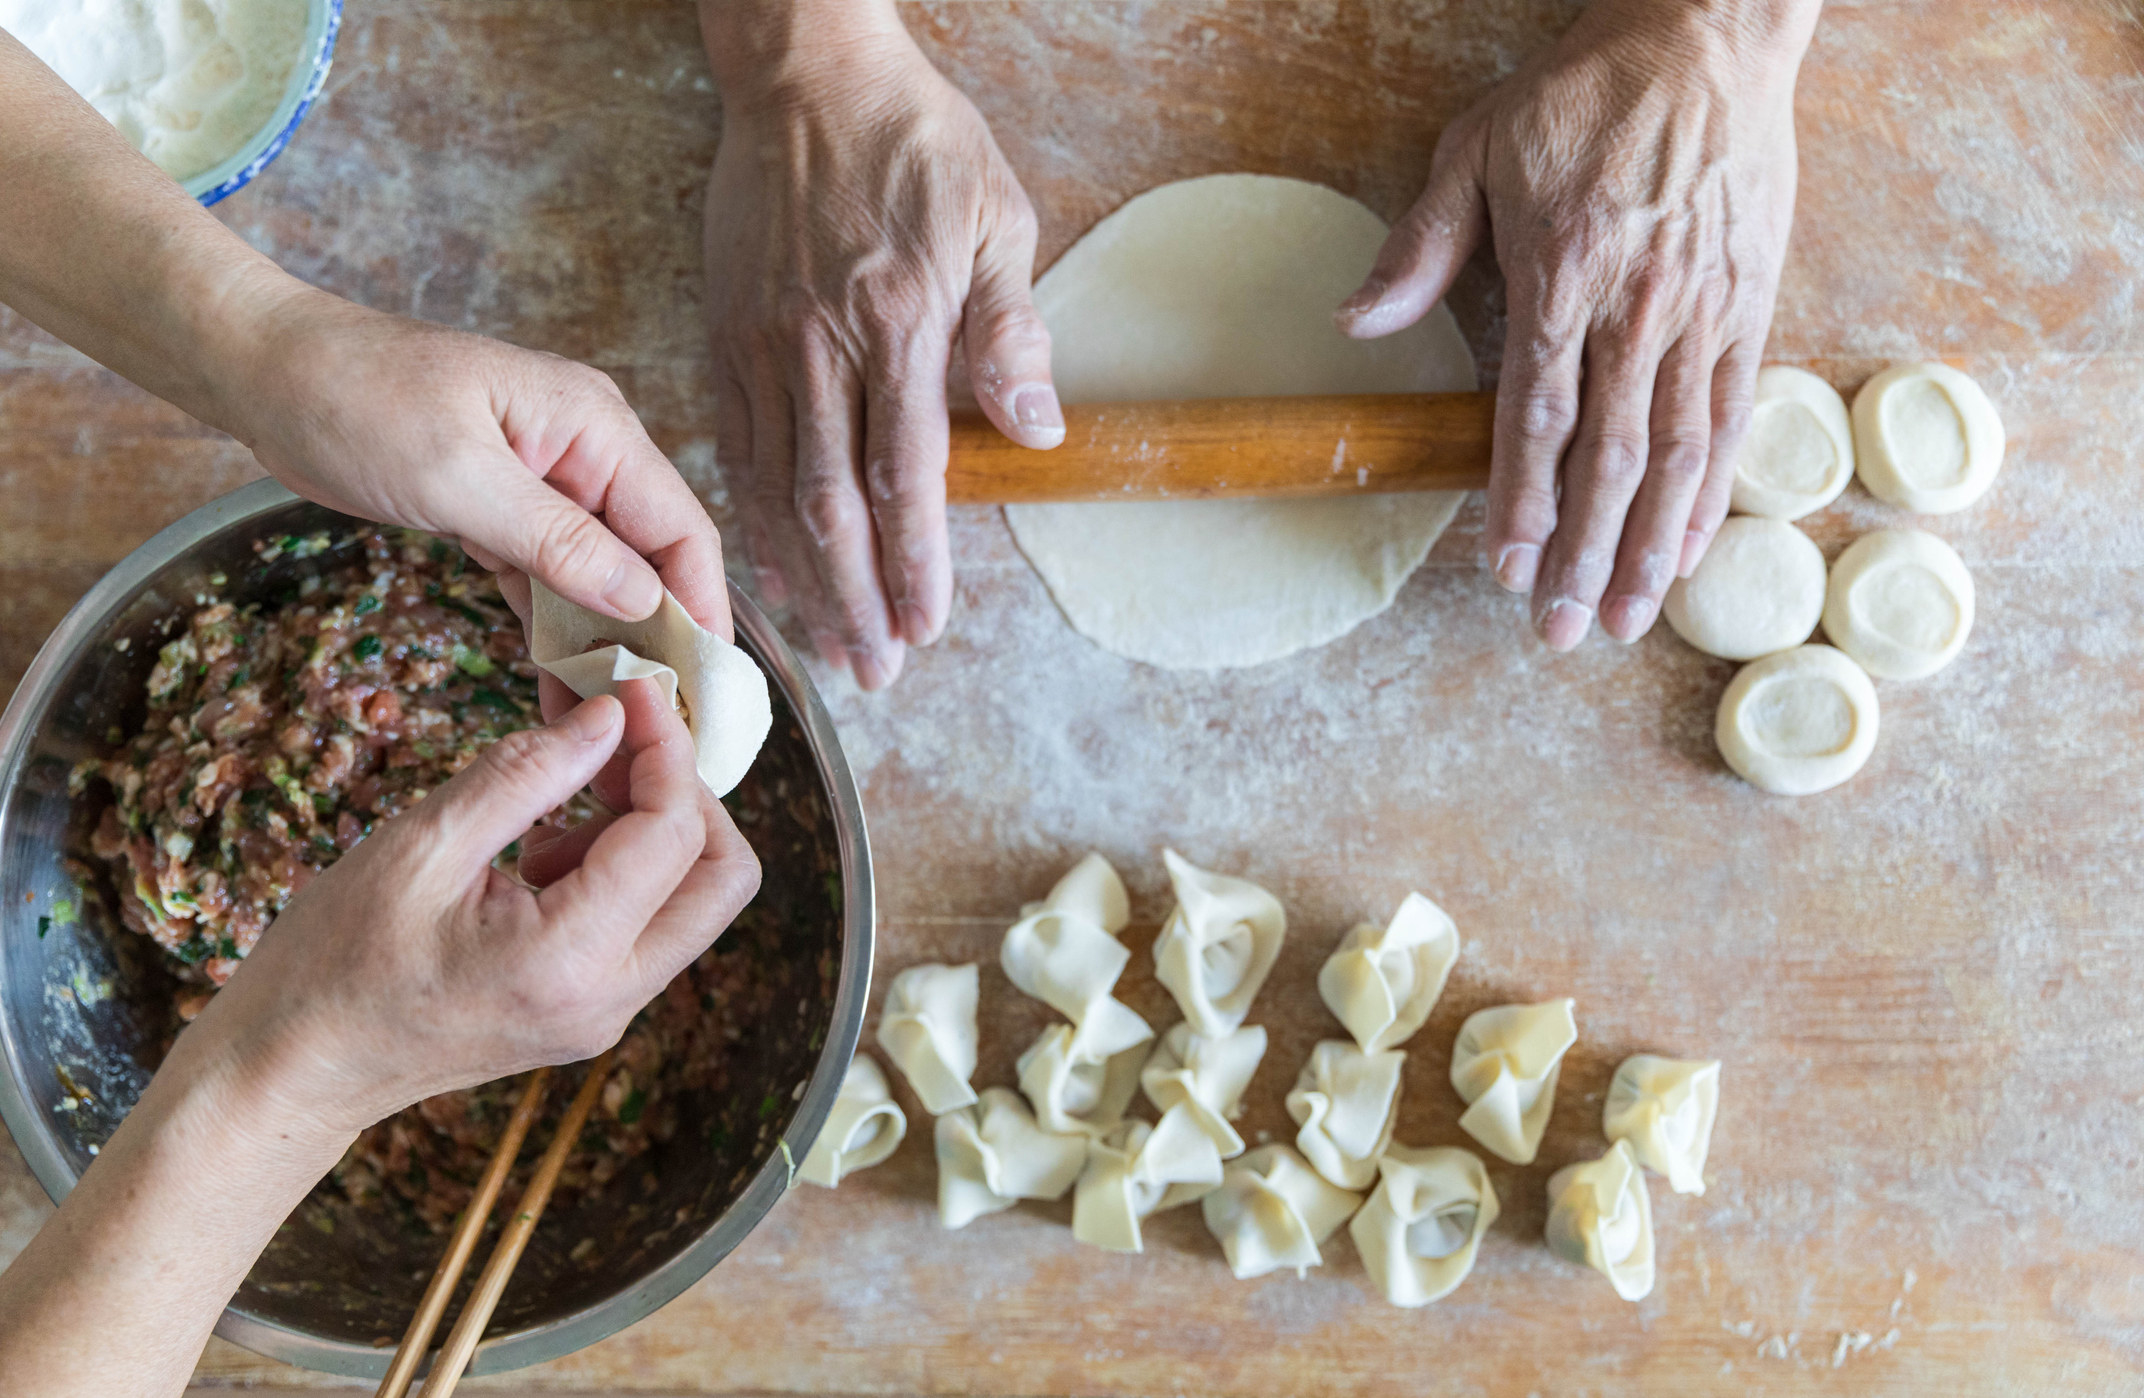 Hands making dumplings.